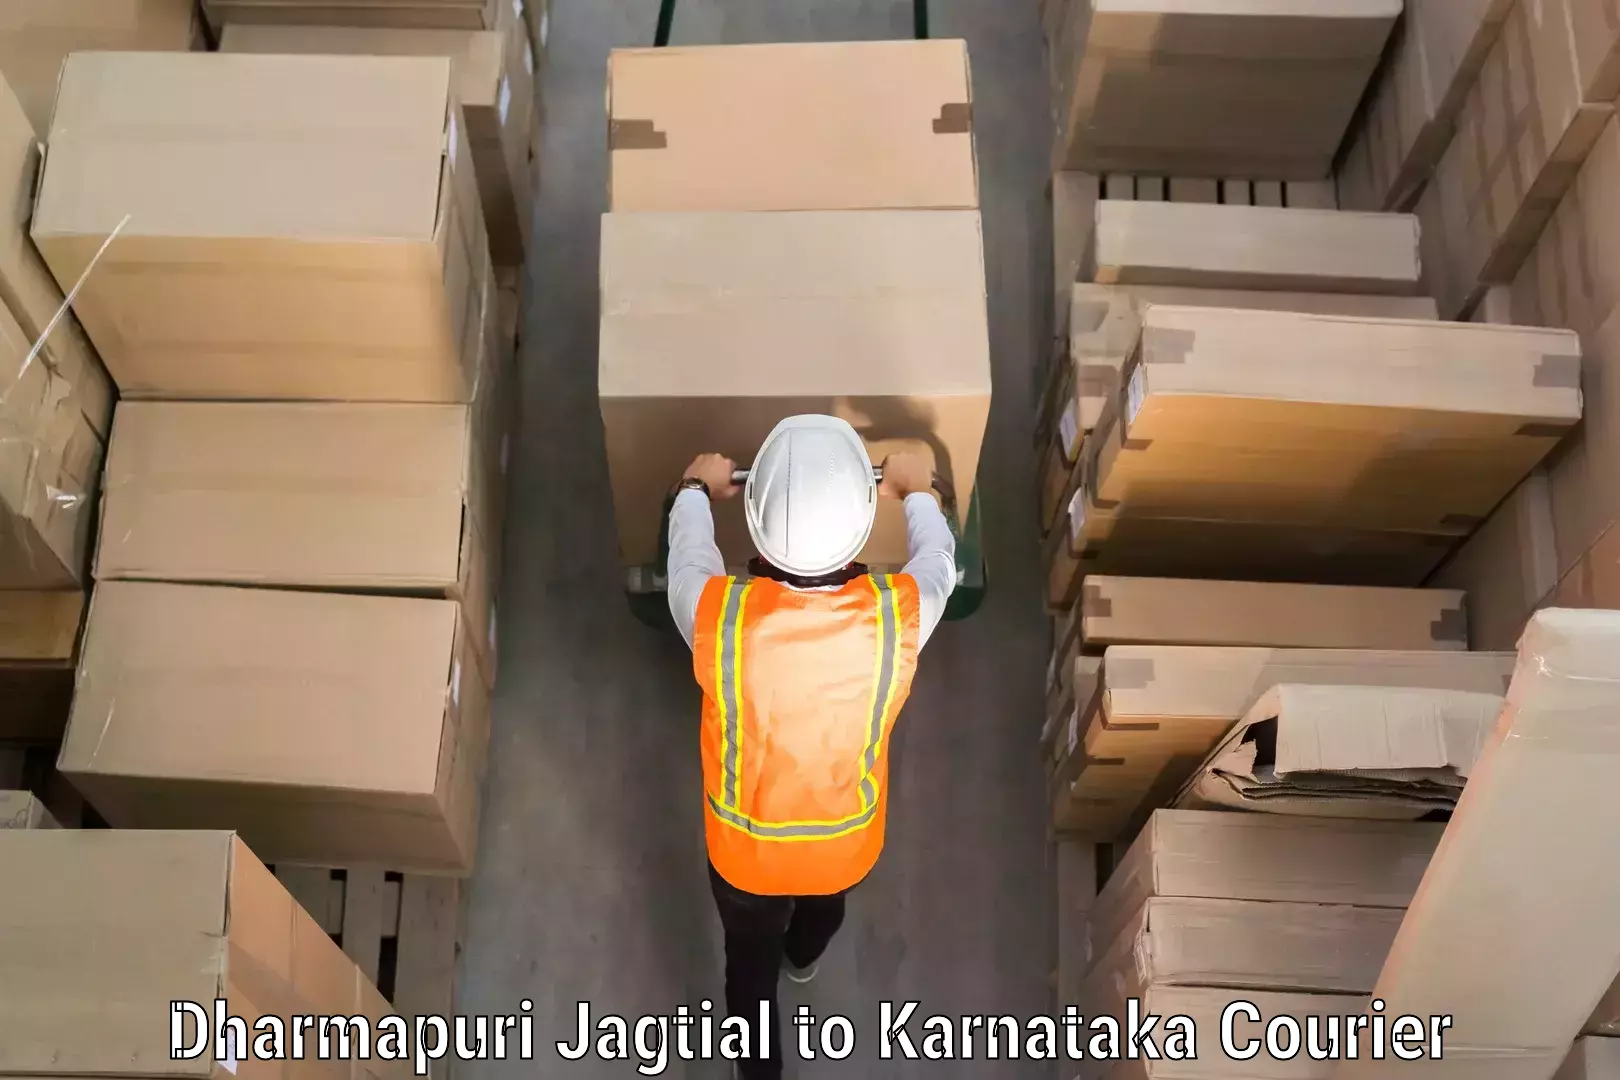 Luggage transport company Dharmapuri Jagtial to Laxmeshwar